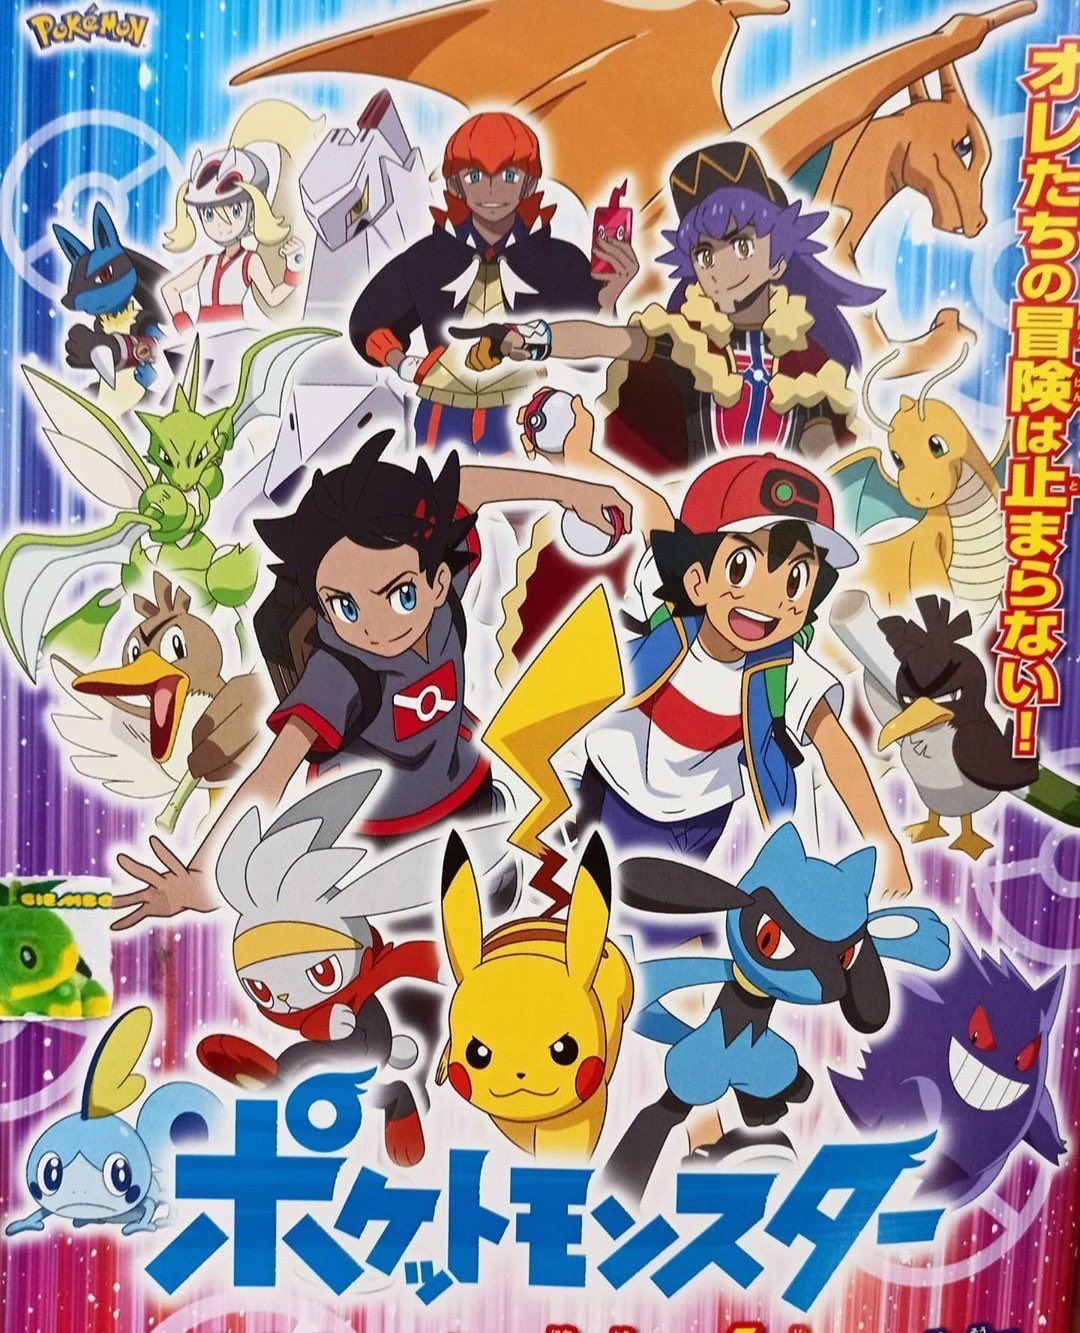 Ash & Goh / Satoshi & Goémon Journeys Ash and Goh Official Magazine! #pokémon #AshandGoh #anipoke #PokémonJourneys #アニポケ #PokémonJN #PocketMonsters #Ash #goh #galar #pikachu #Leon #Raihan